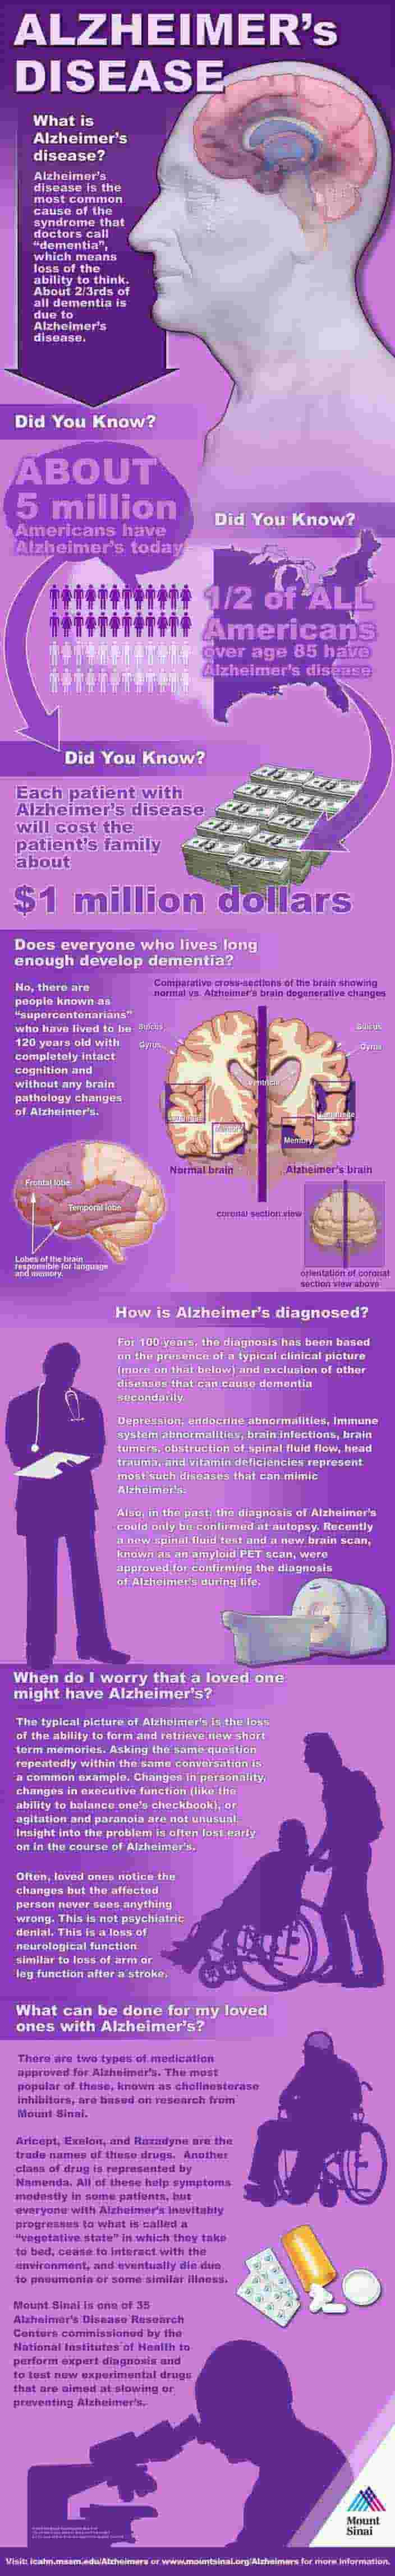 Alzheimer's Disease Infographic